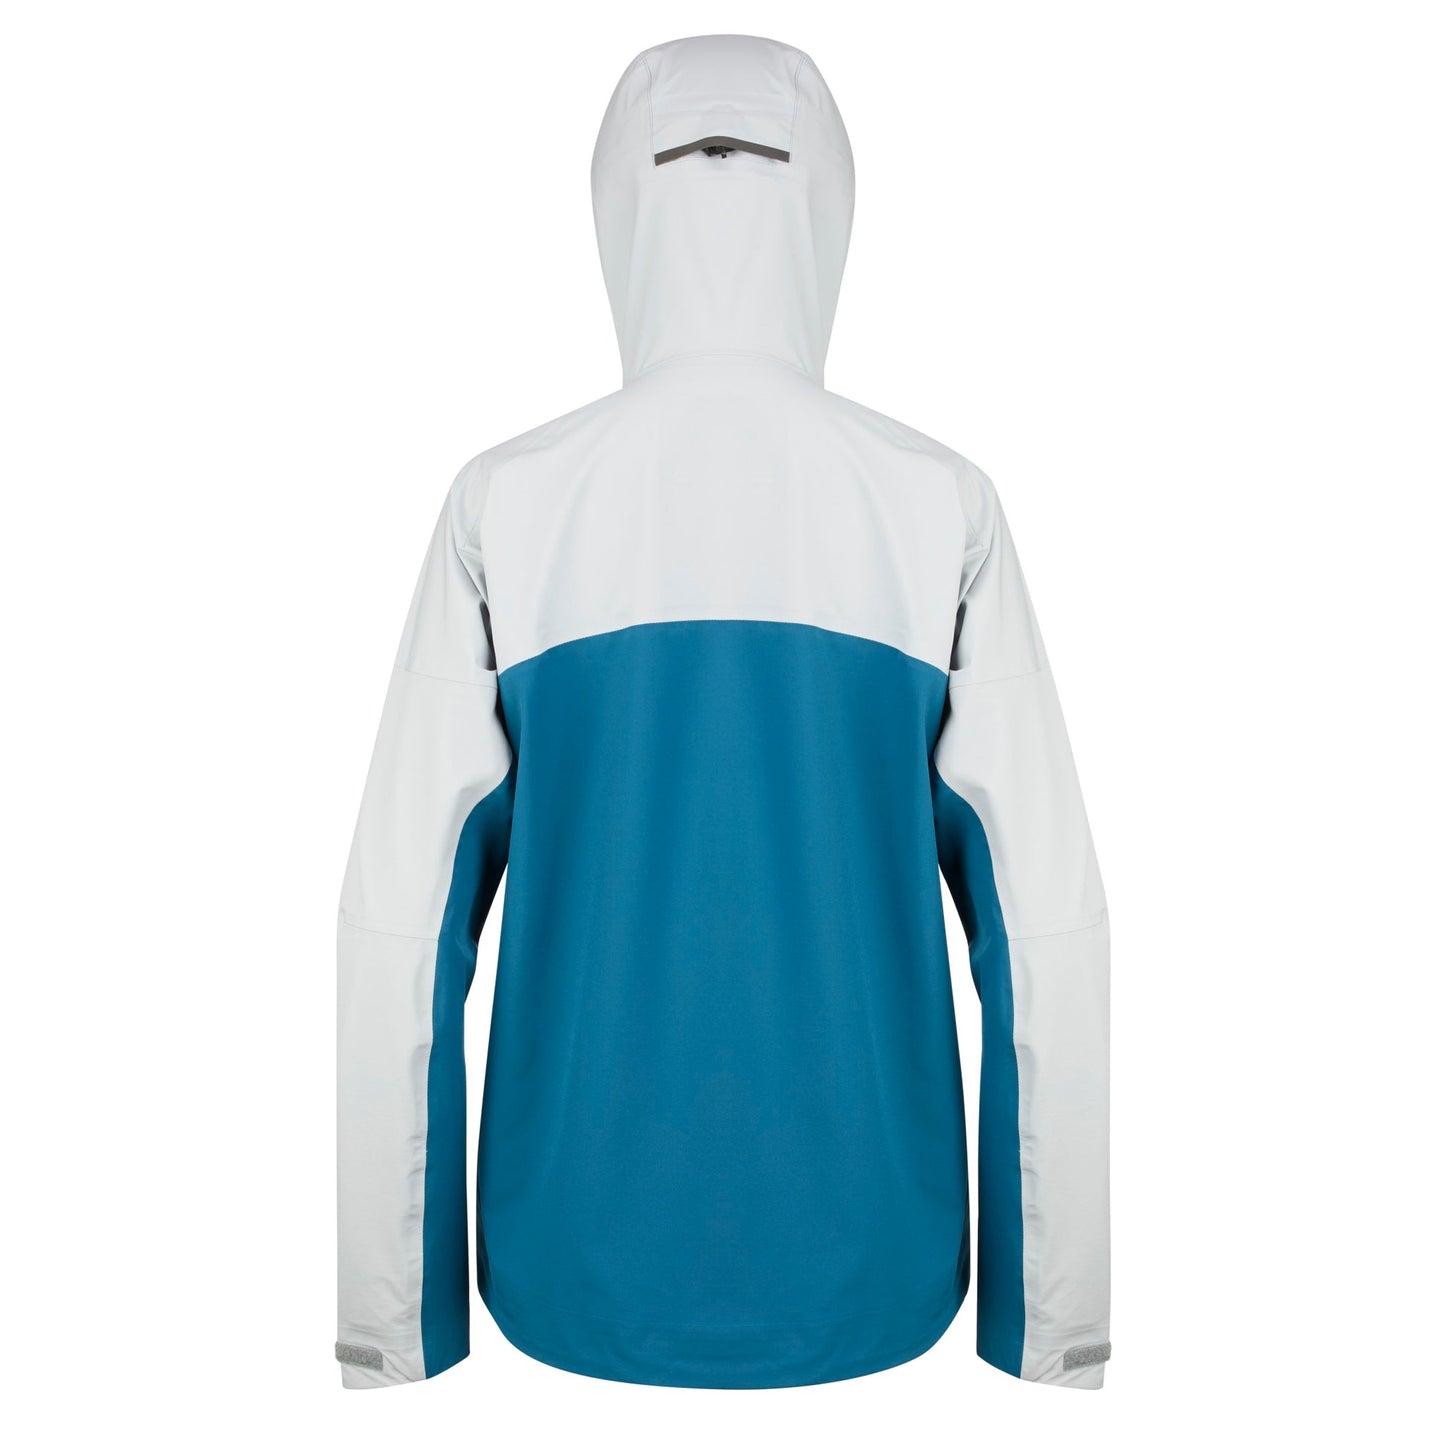 Mustang Women's Callan Waterproof Jacket Small (Mid Grey - Ocean Blue)